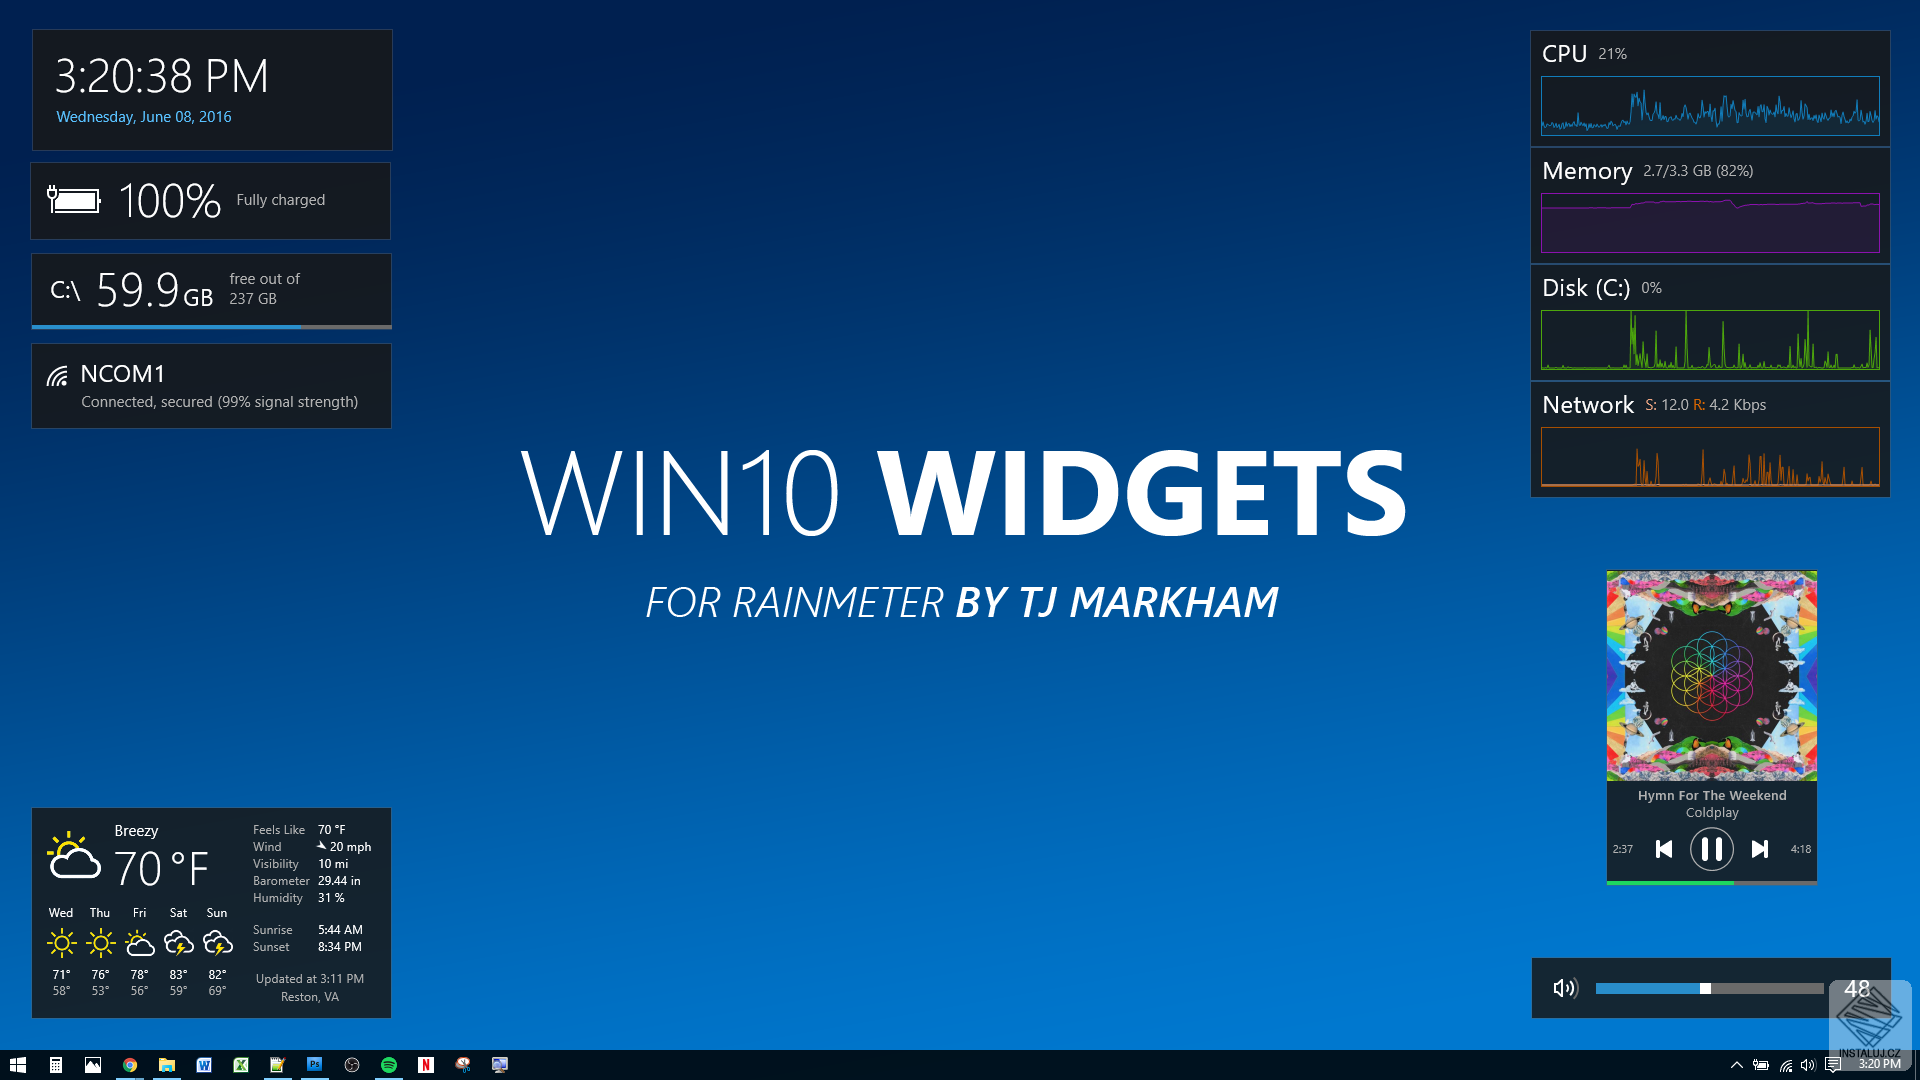 Win10 Widgets